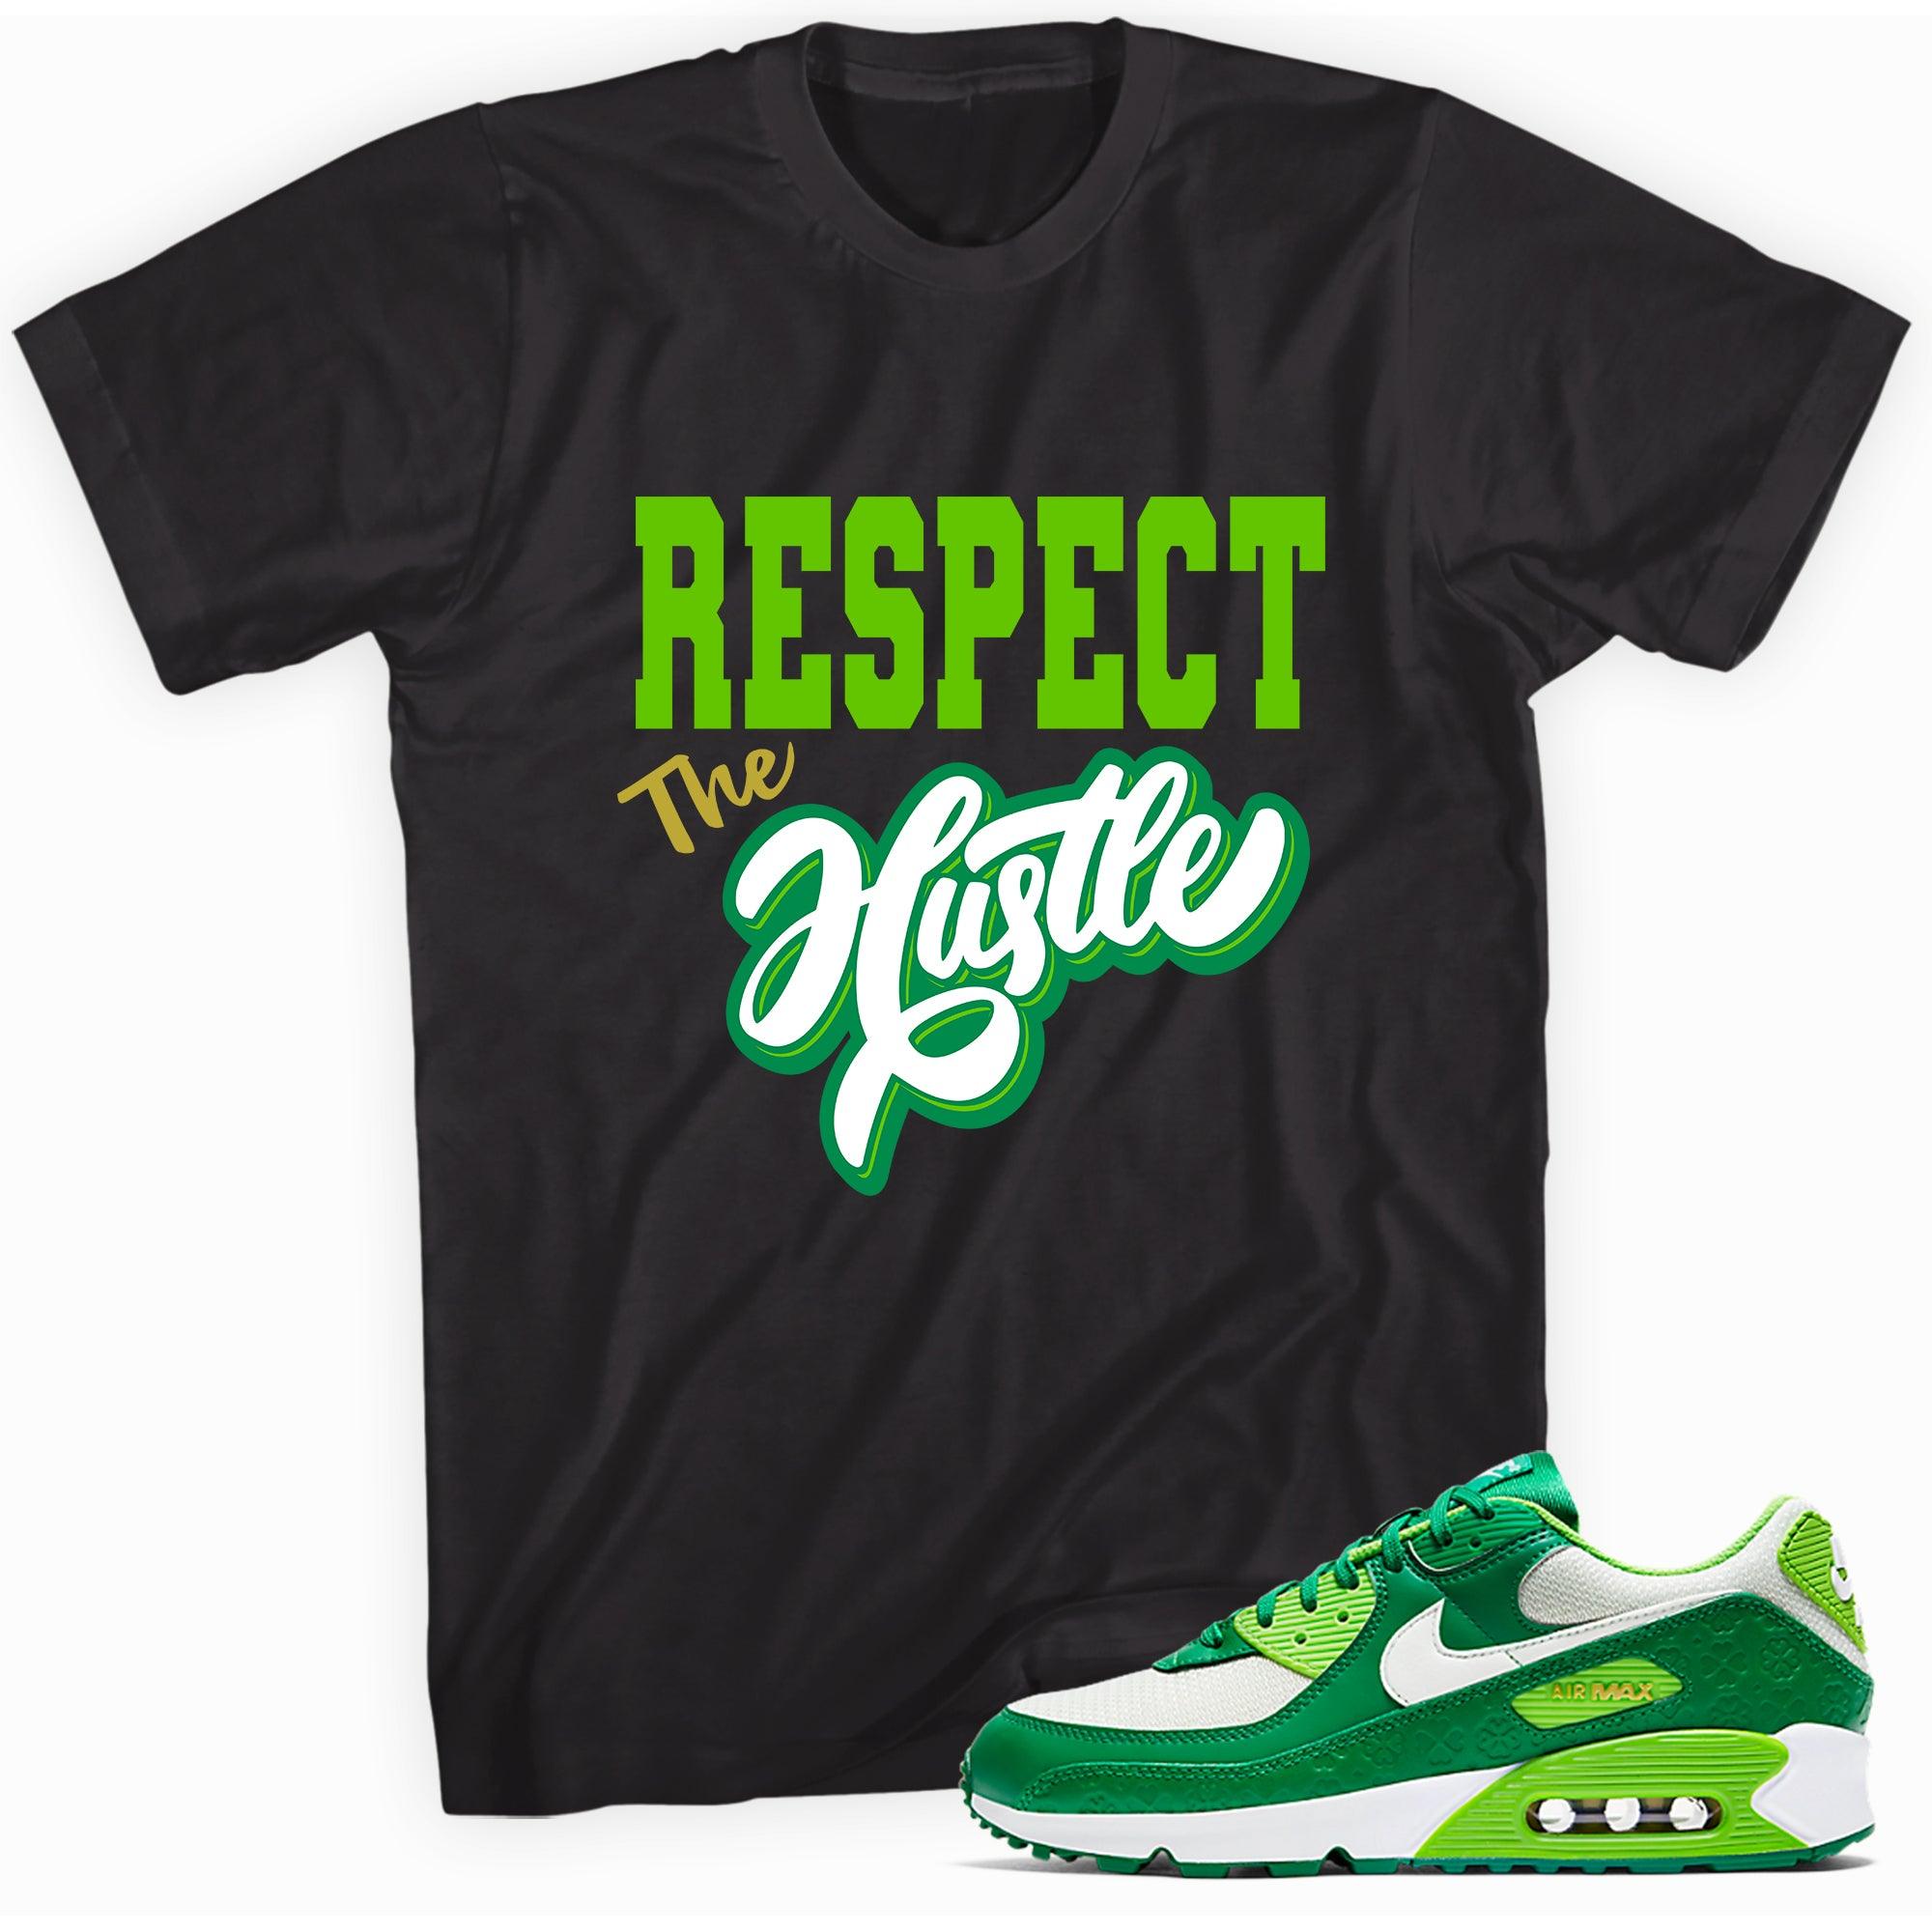 Black Respect The Hustle Shirt Nike Air Max 90 St Patricks Day 2021 photo